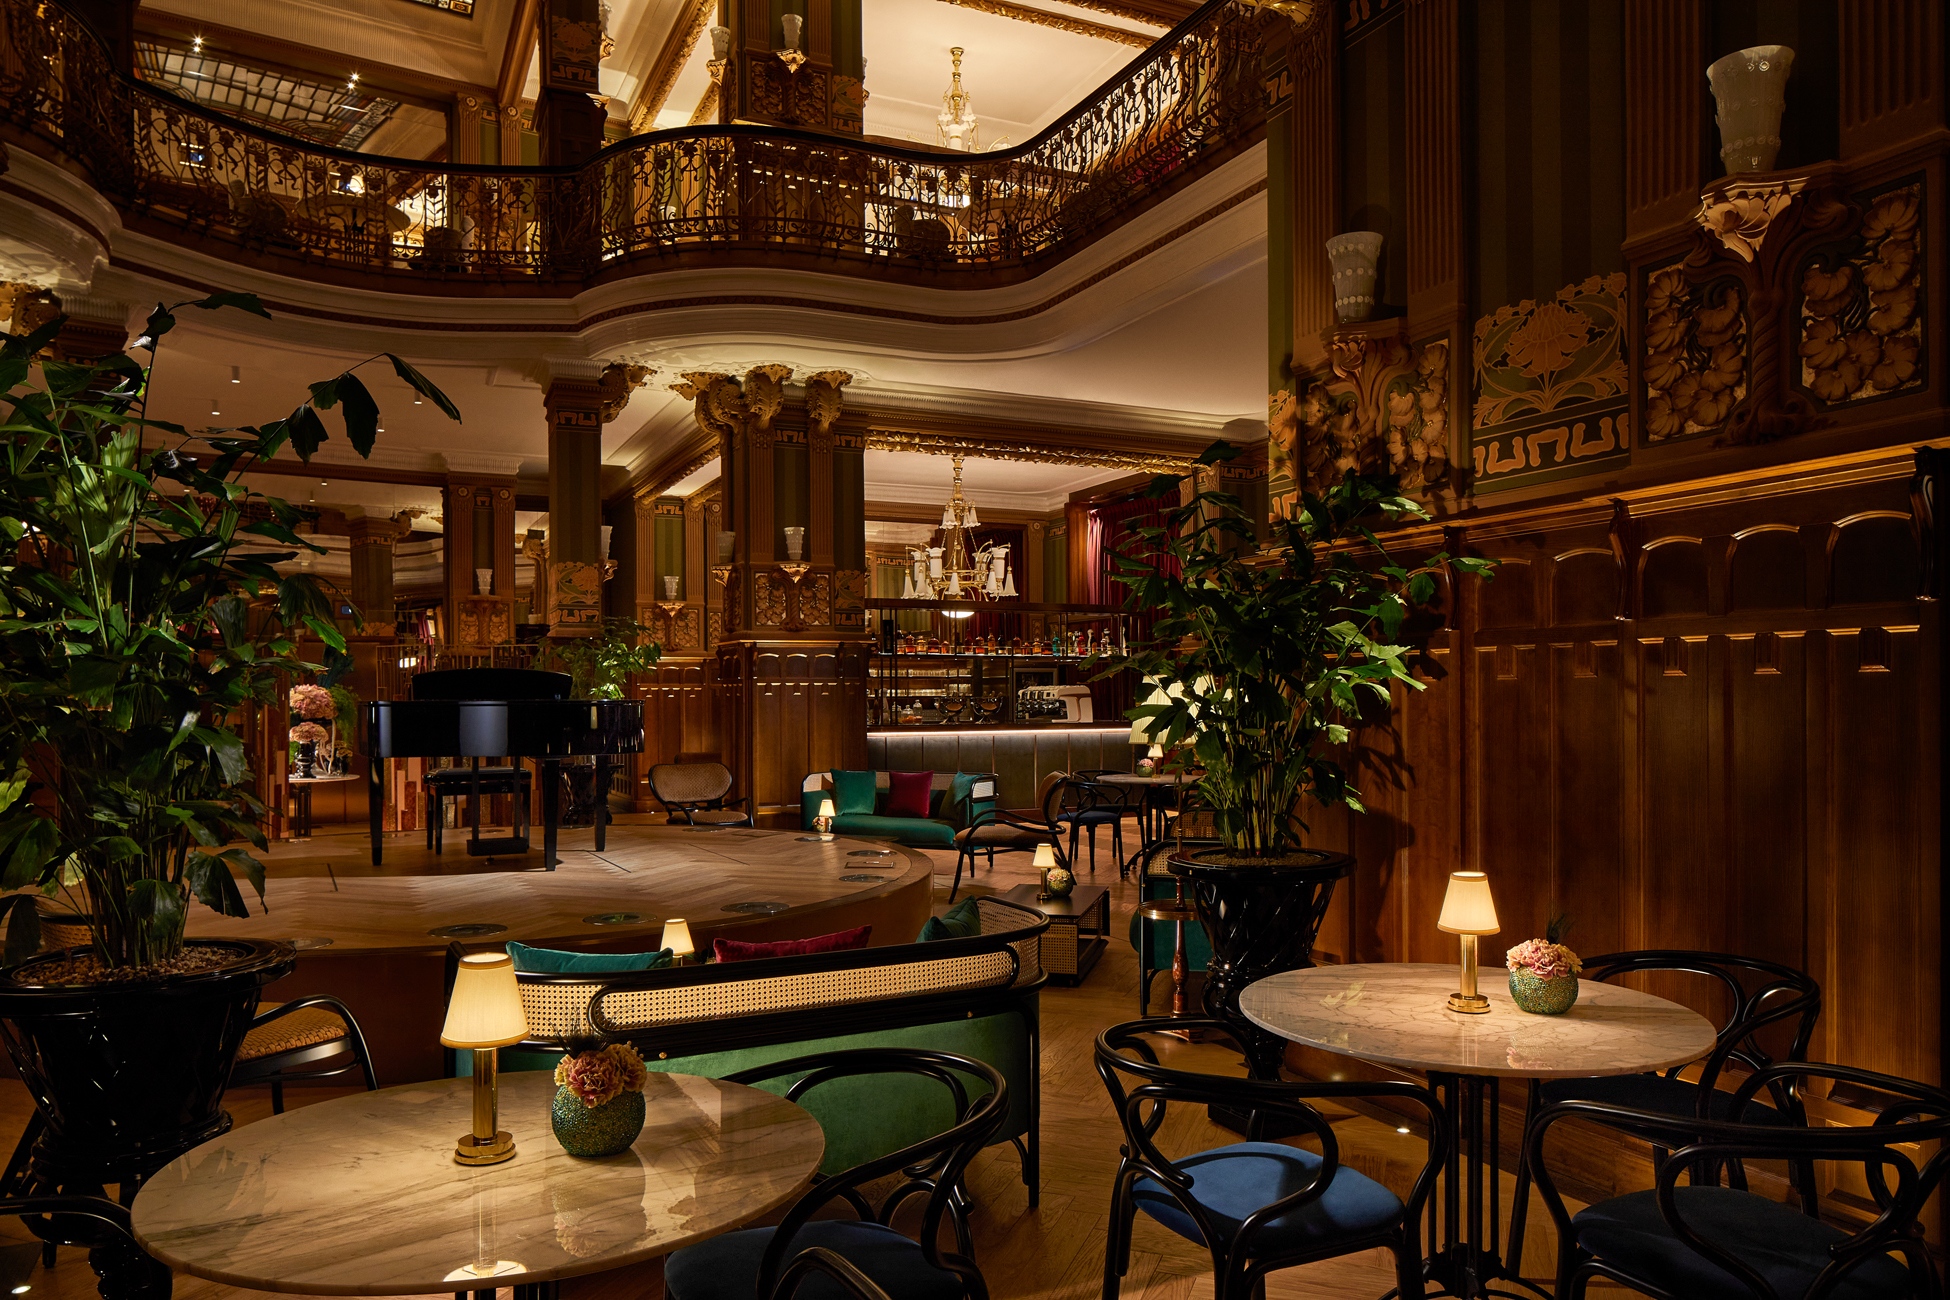 Matild Palace Luxurios Hotel Budapest Hungary Café and Cabaret Coffeehouse